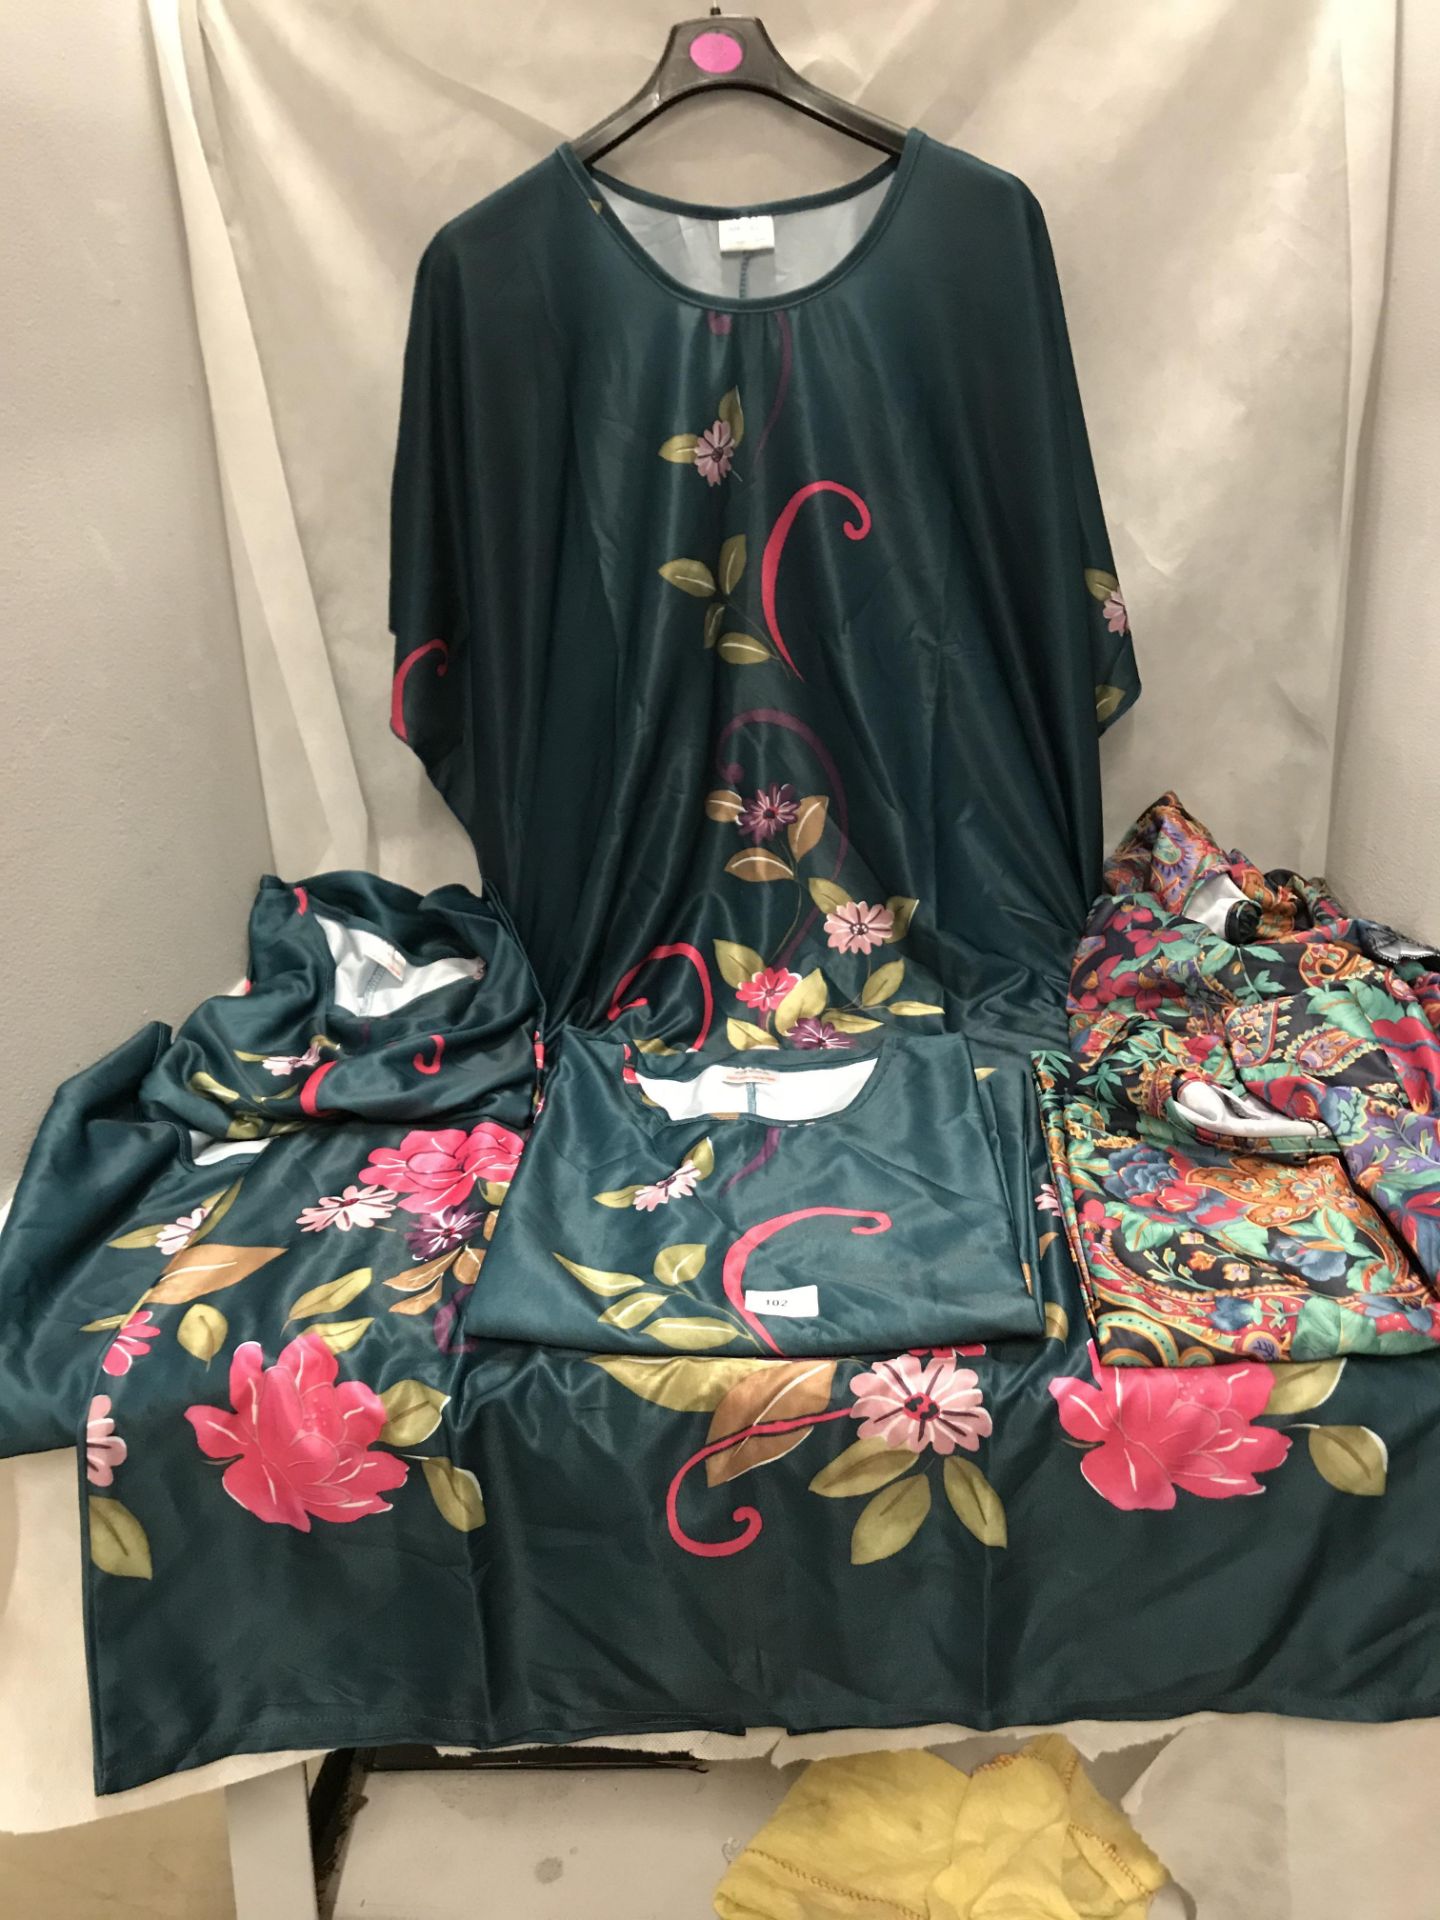 6 x floral pattern kaftan style dresses in green (sizes M-XL)